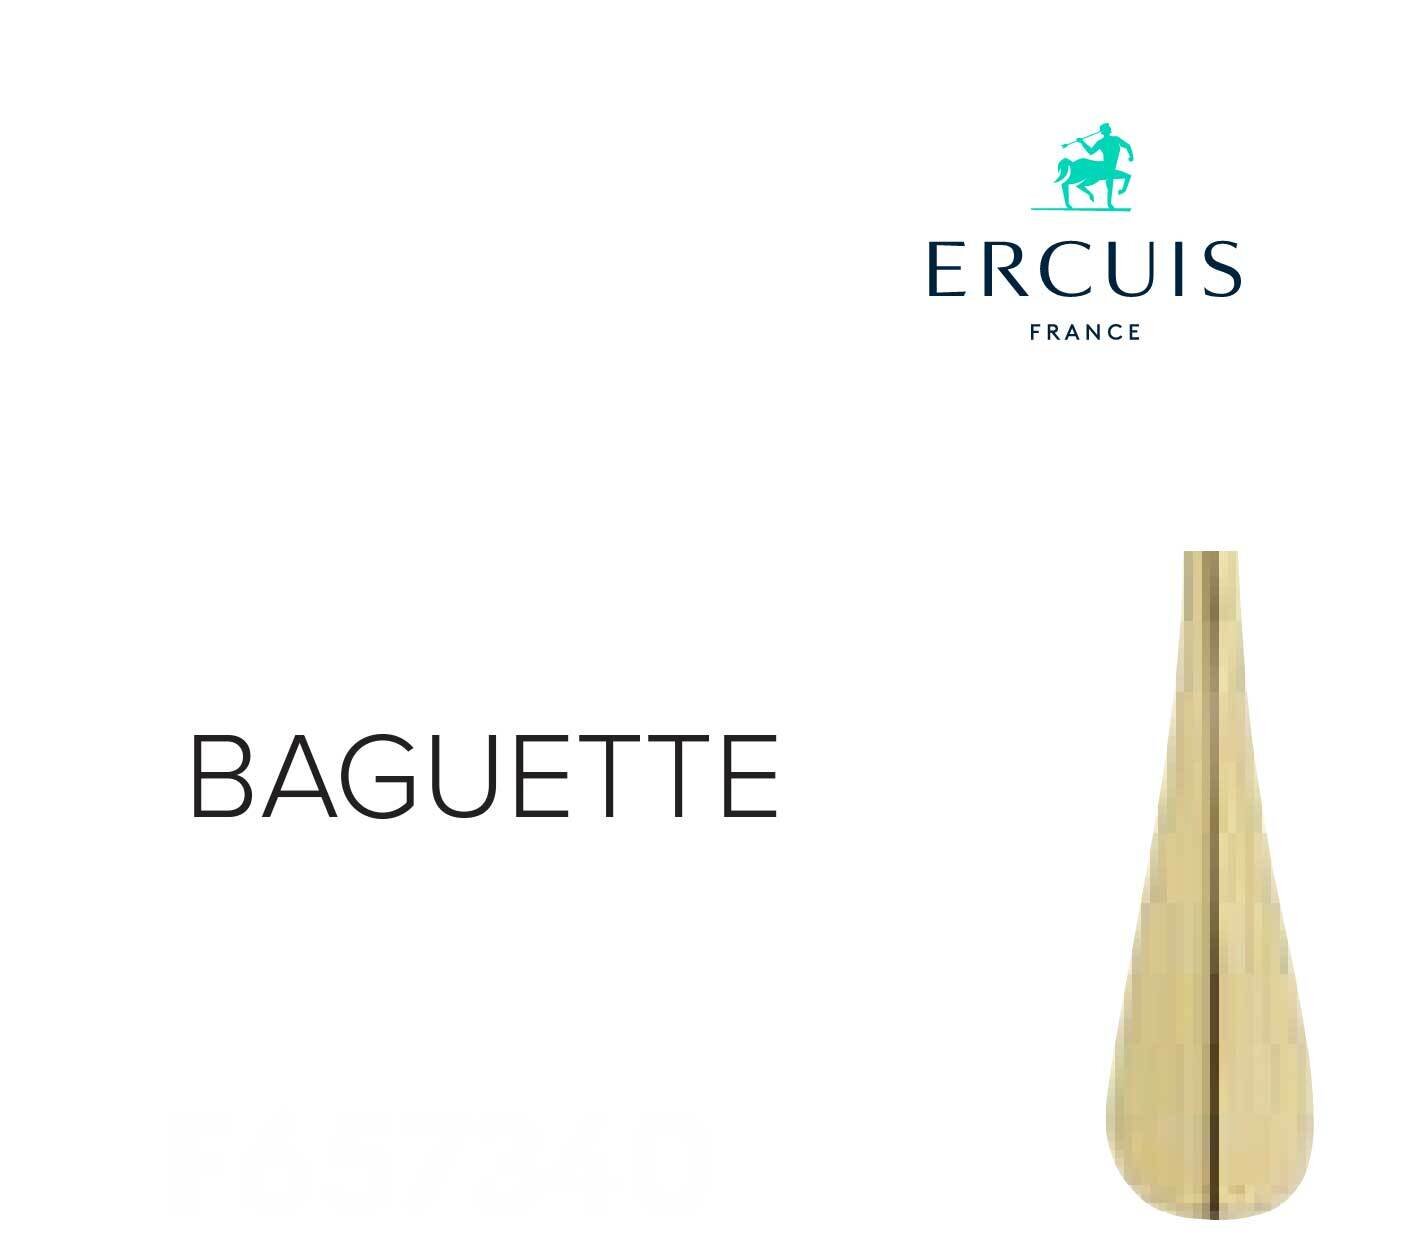 Ercuis Baguette Butter Serving Knife Gold Plated F657340-76